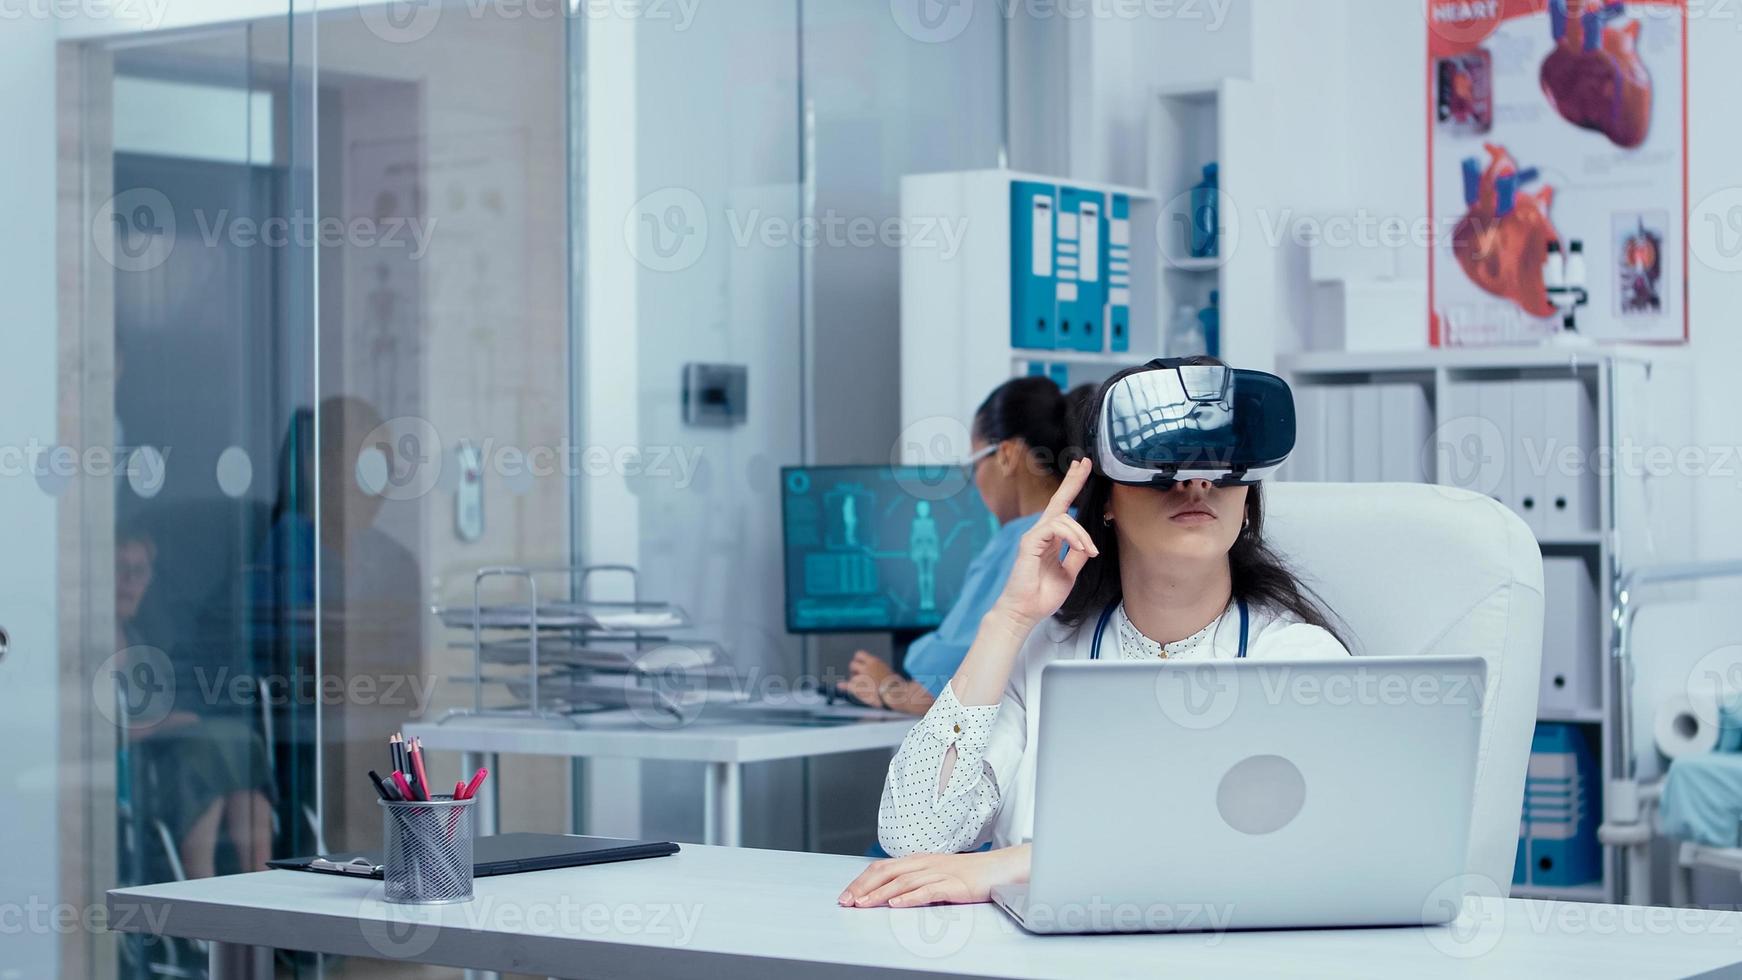 Forschung in der Medizin mit Virtual Reality foto